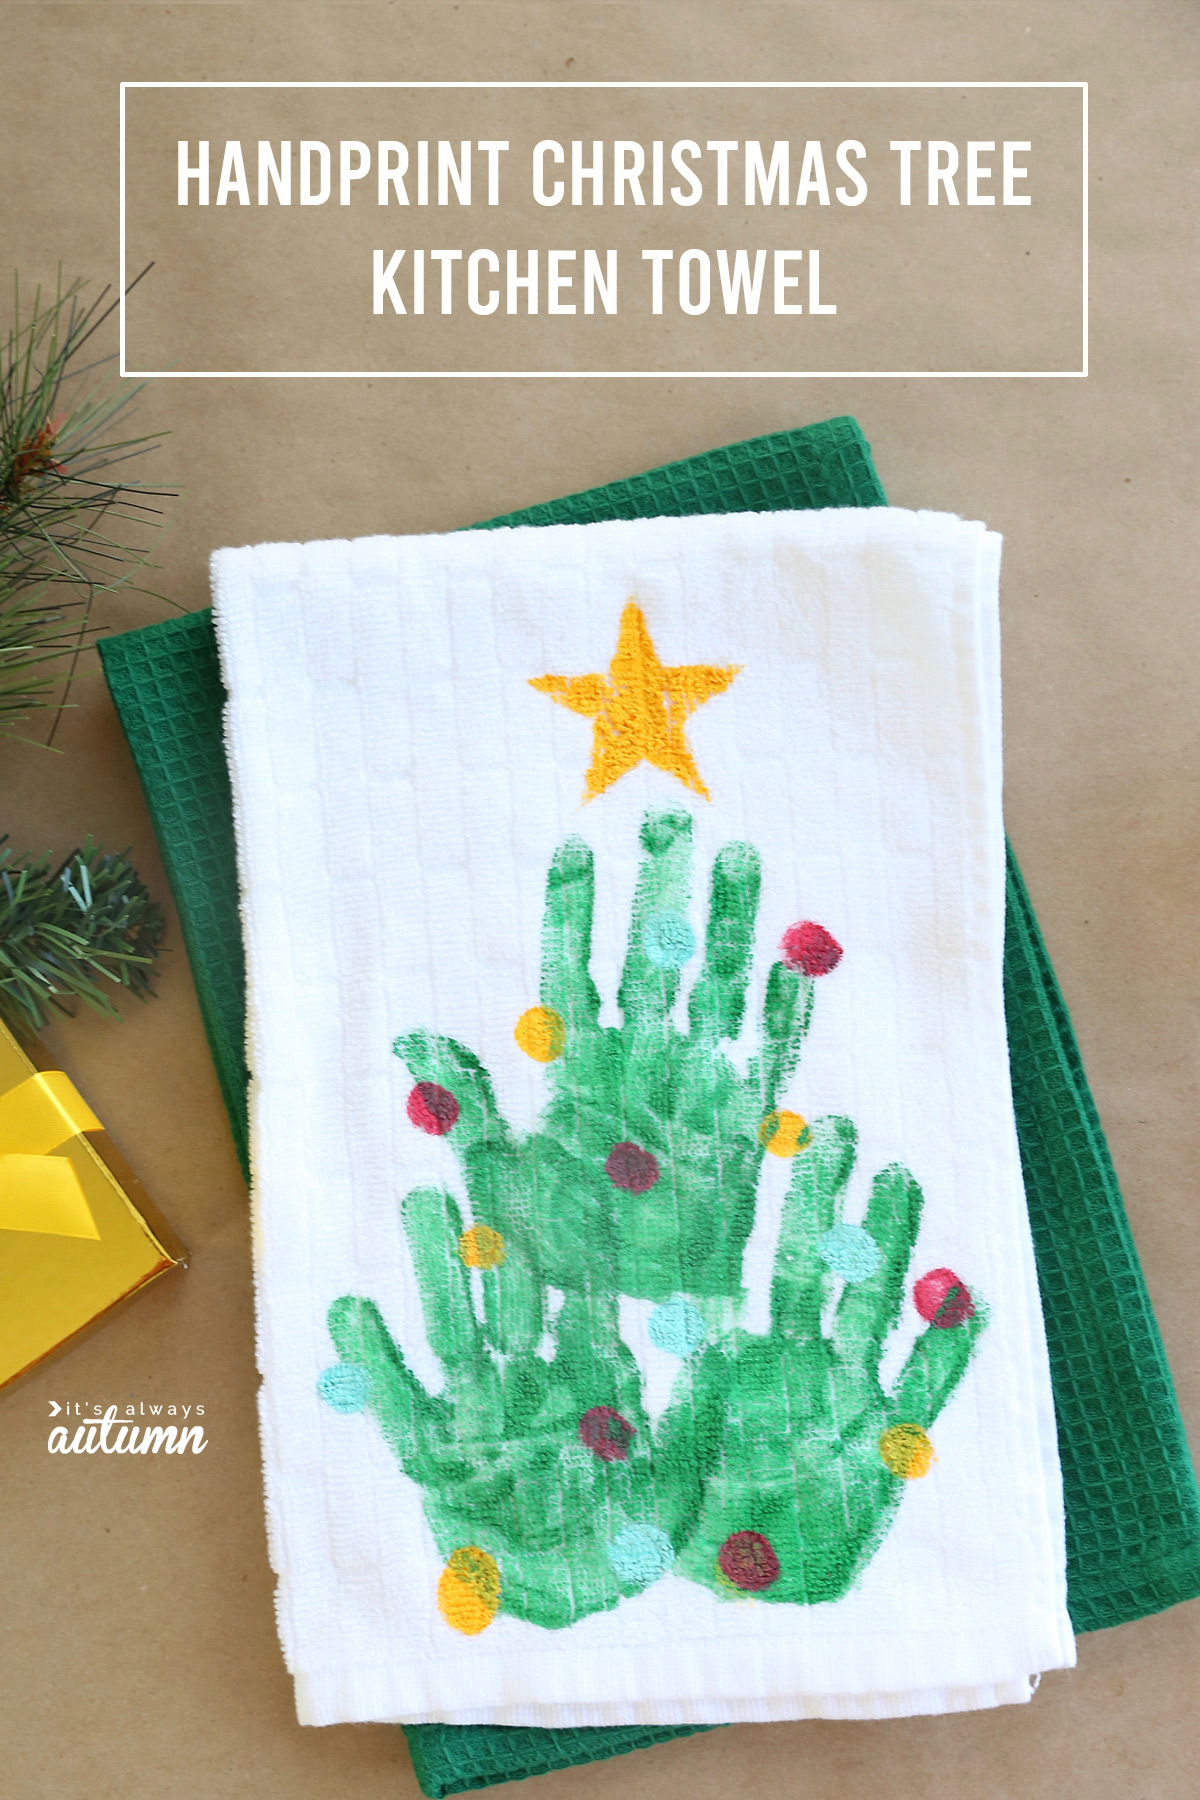 https://www.itsalwaysautumn.com/wp-content/uploads/2019/11/handprint-christmas-tree-kitchen-towel.jpg